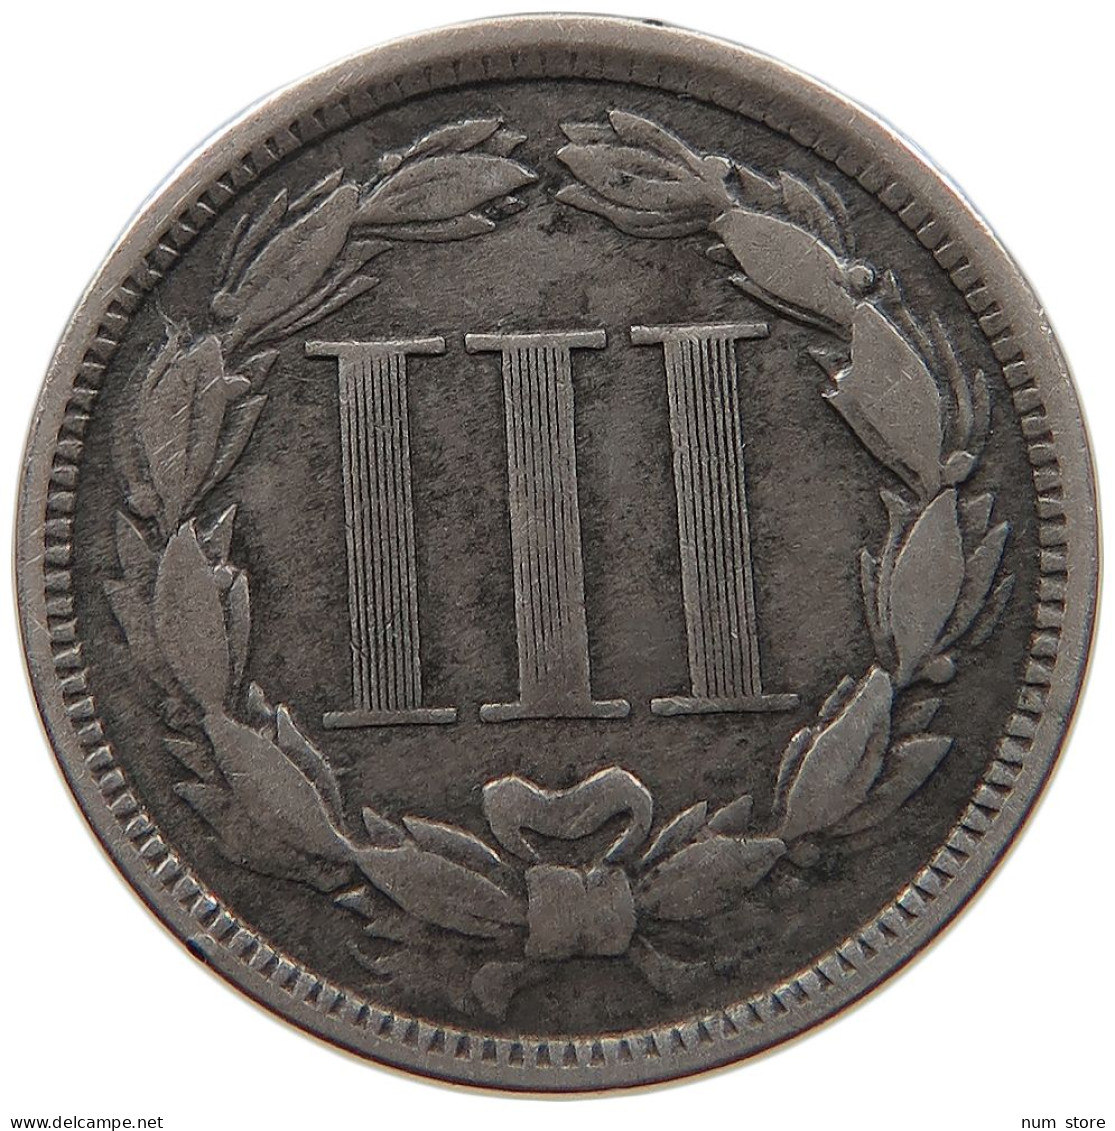 UNITED STATES OF AMERICA THREE CENT NICKEL 1868  #t143 0371 - 2, 3 & 20 Cent